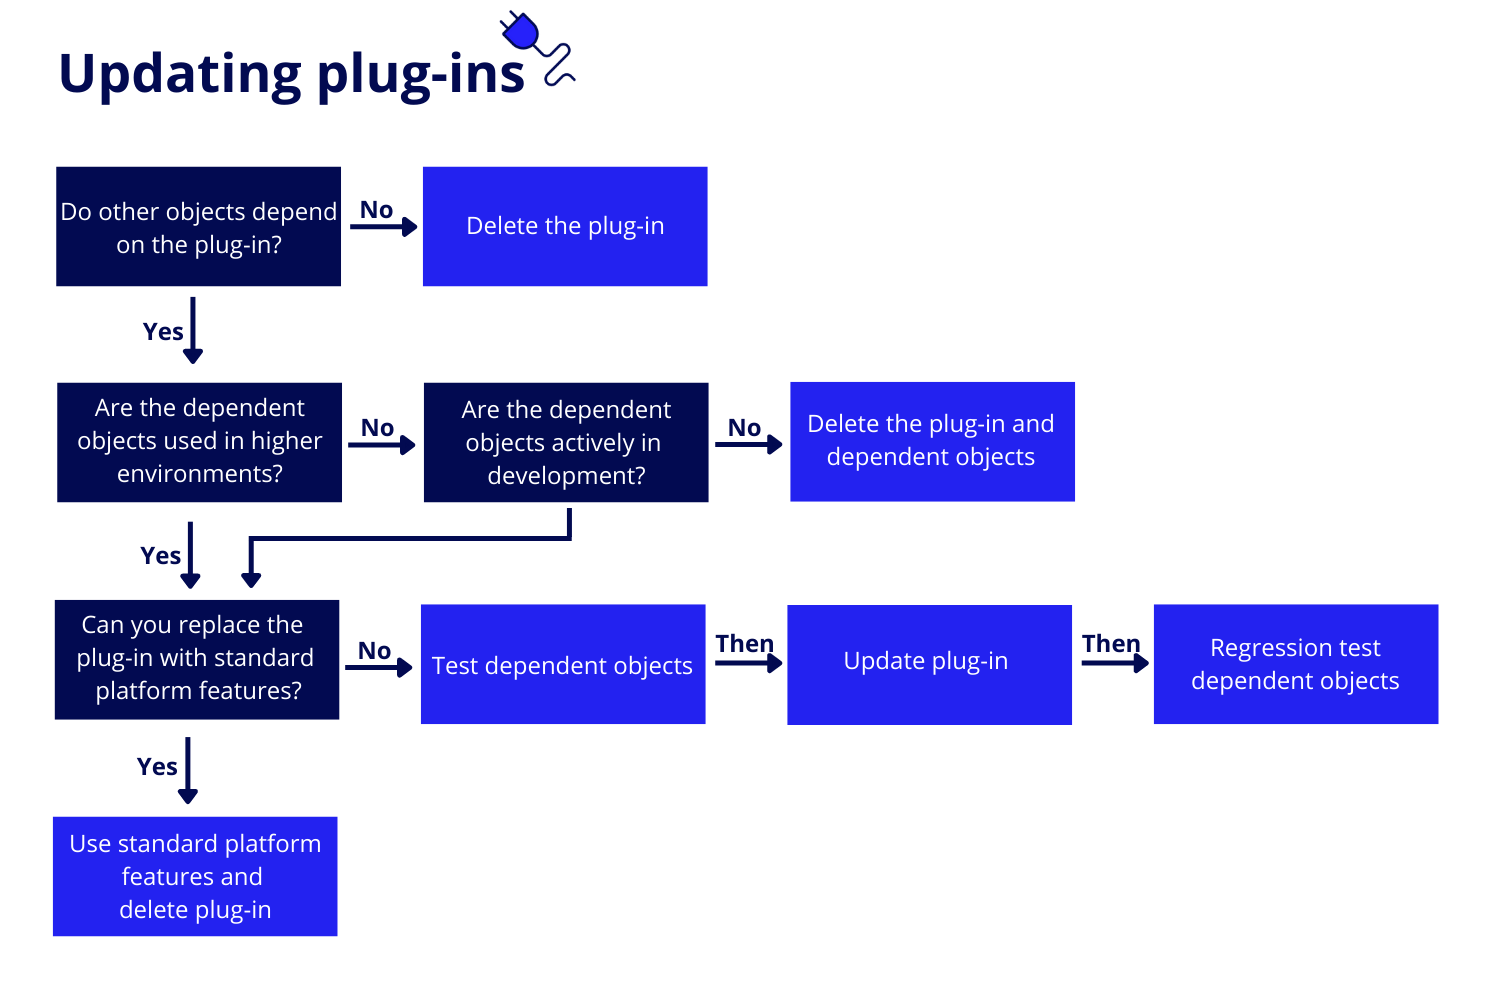 images/update-plug-ins-diagram.png